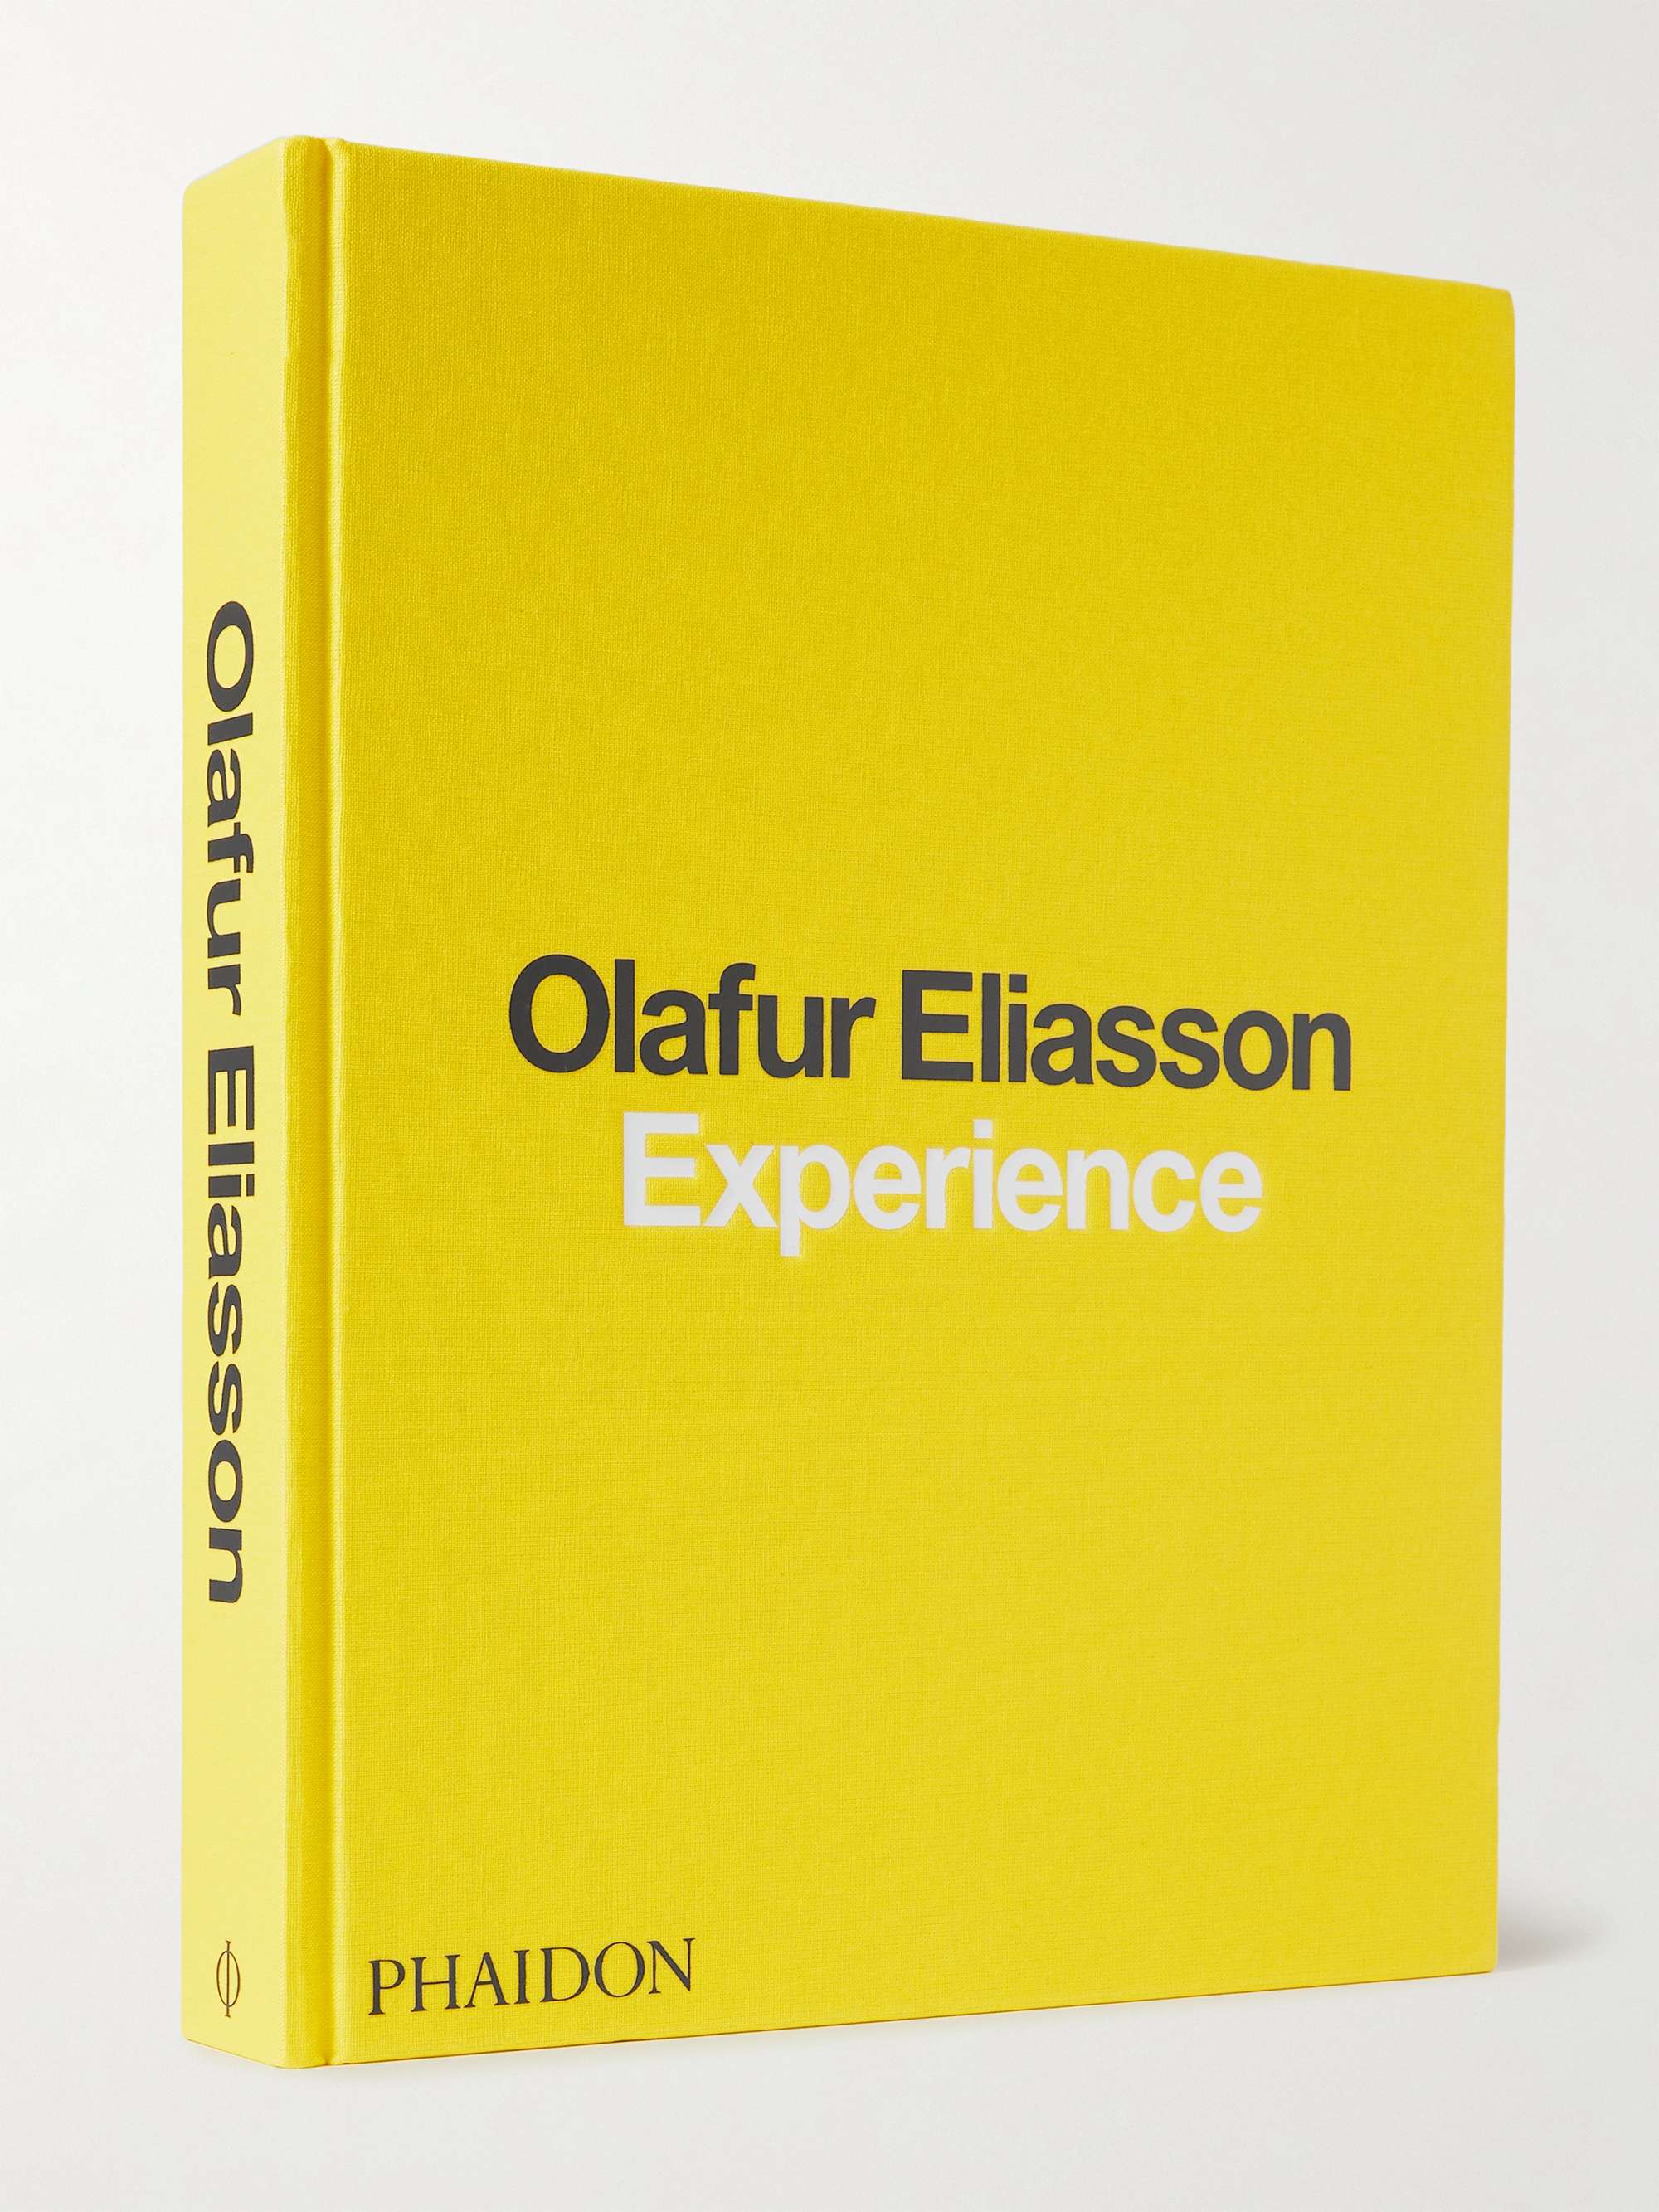 Yellow Olafur Eliasson: Experience Hardcover Book | PHAIDON | MR PORTER